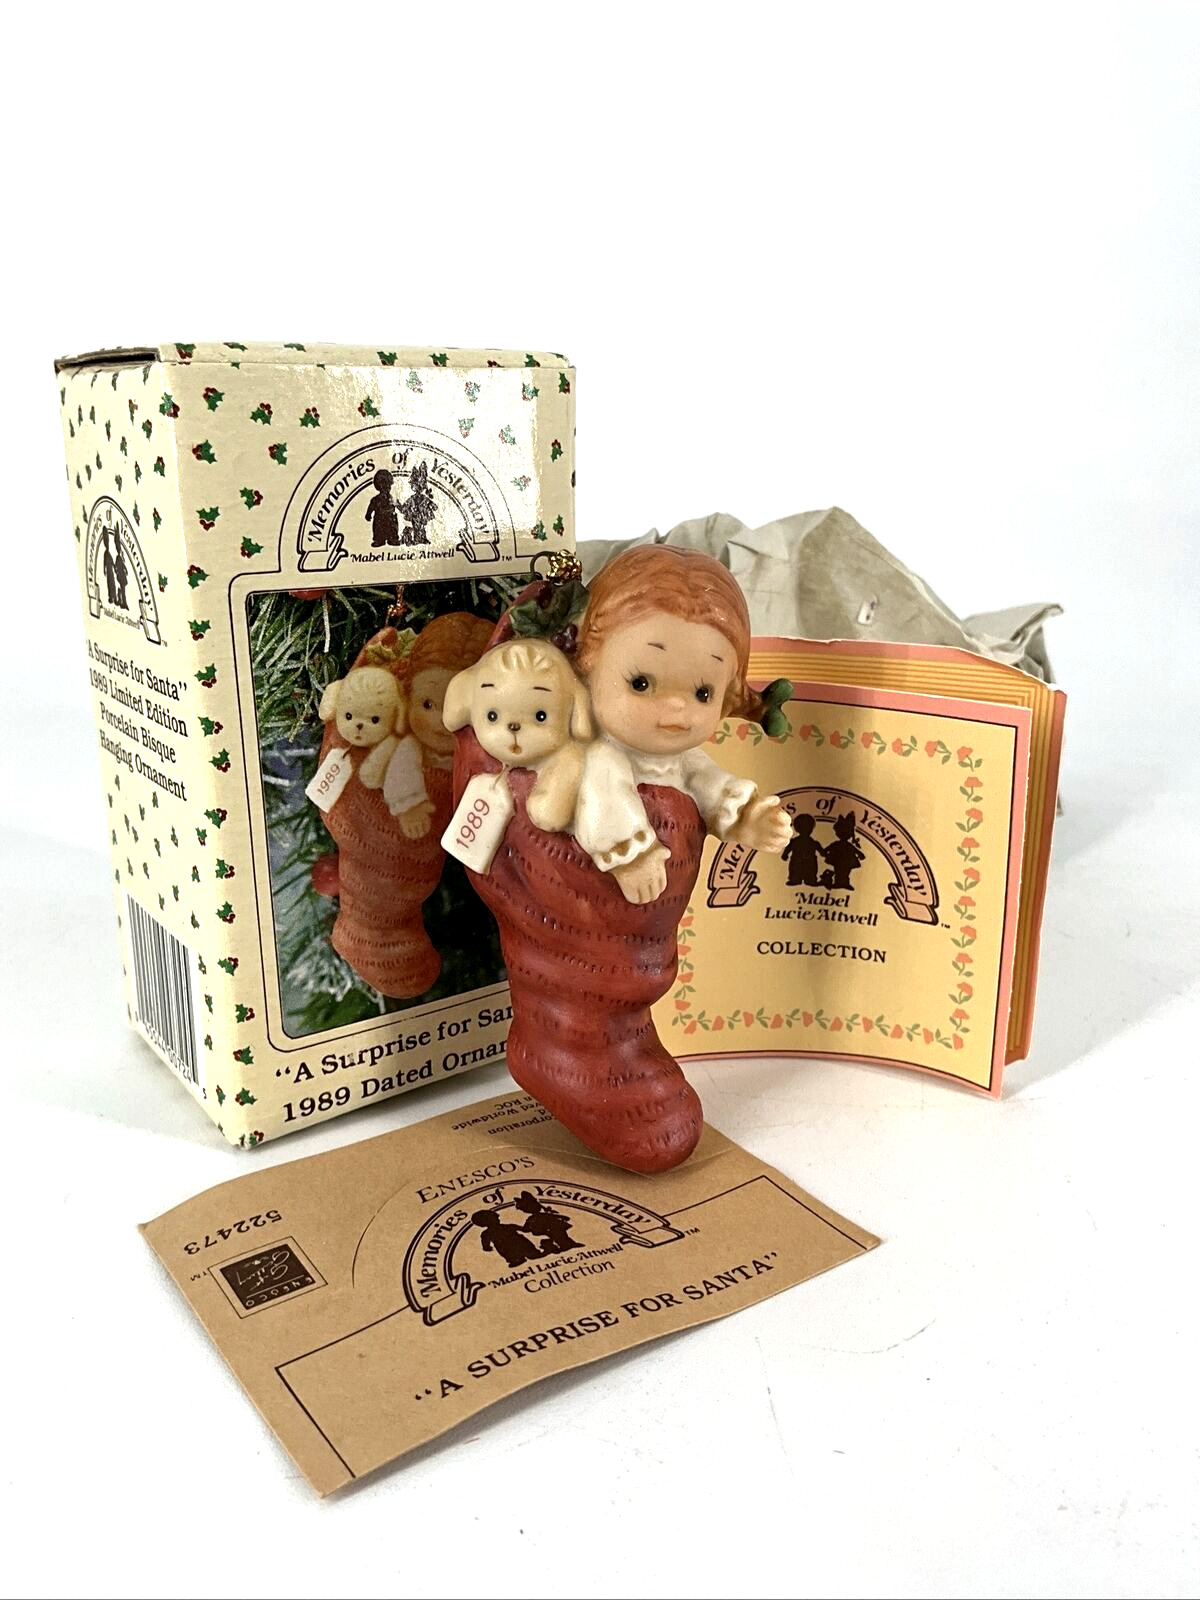 Memories of Yesterday Ornament “A Surprise for Santa” Enesco 1989